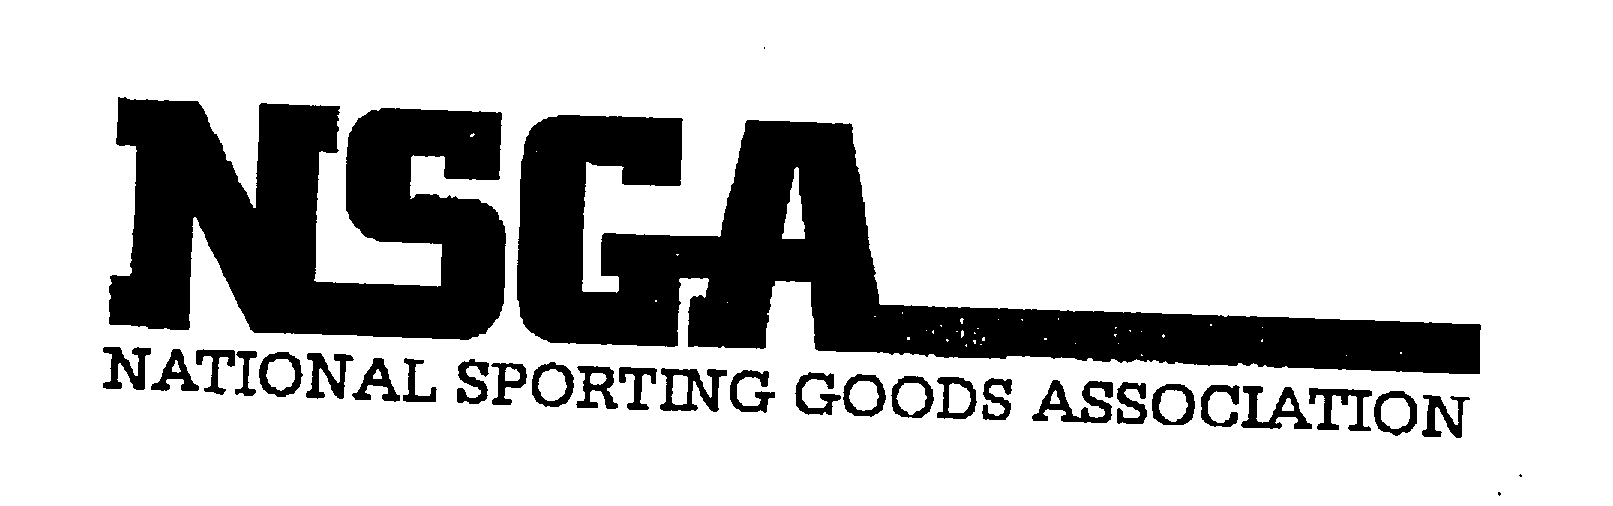  NSGA NATIONAL SPORTING GOODS ASSOCIATION